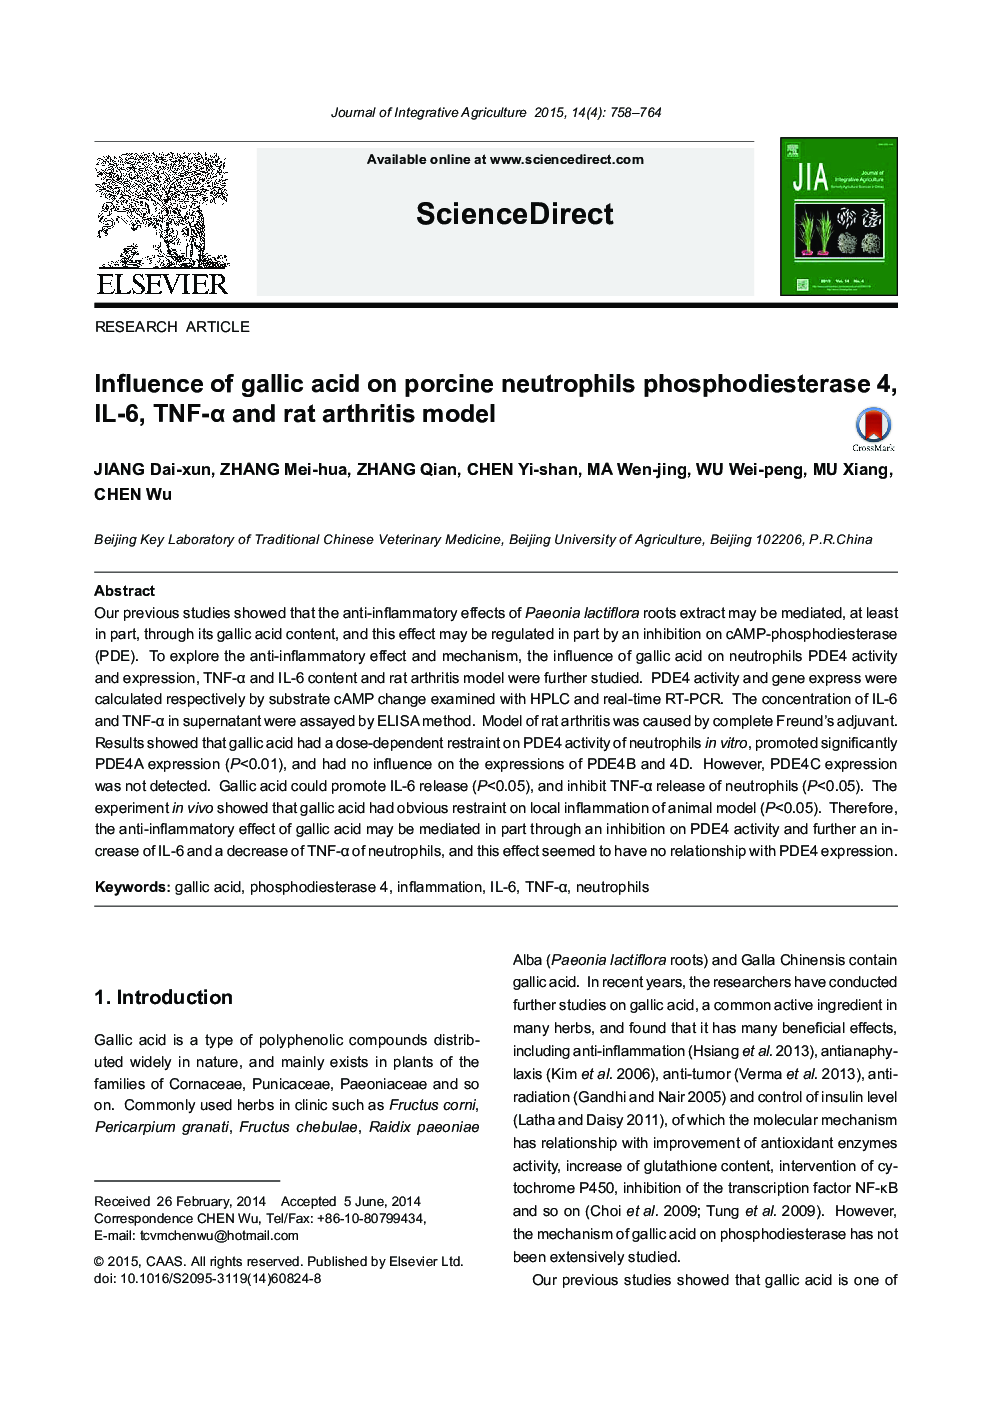 Influence of gallic acid on porcine neutrophils phosphodiesterase 4, IL-6, TNF-α and rat arthritis model